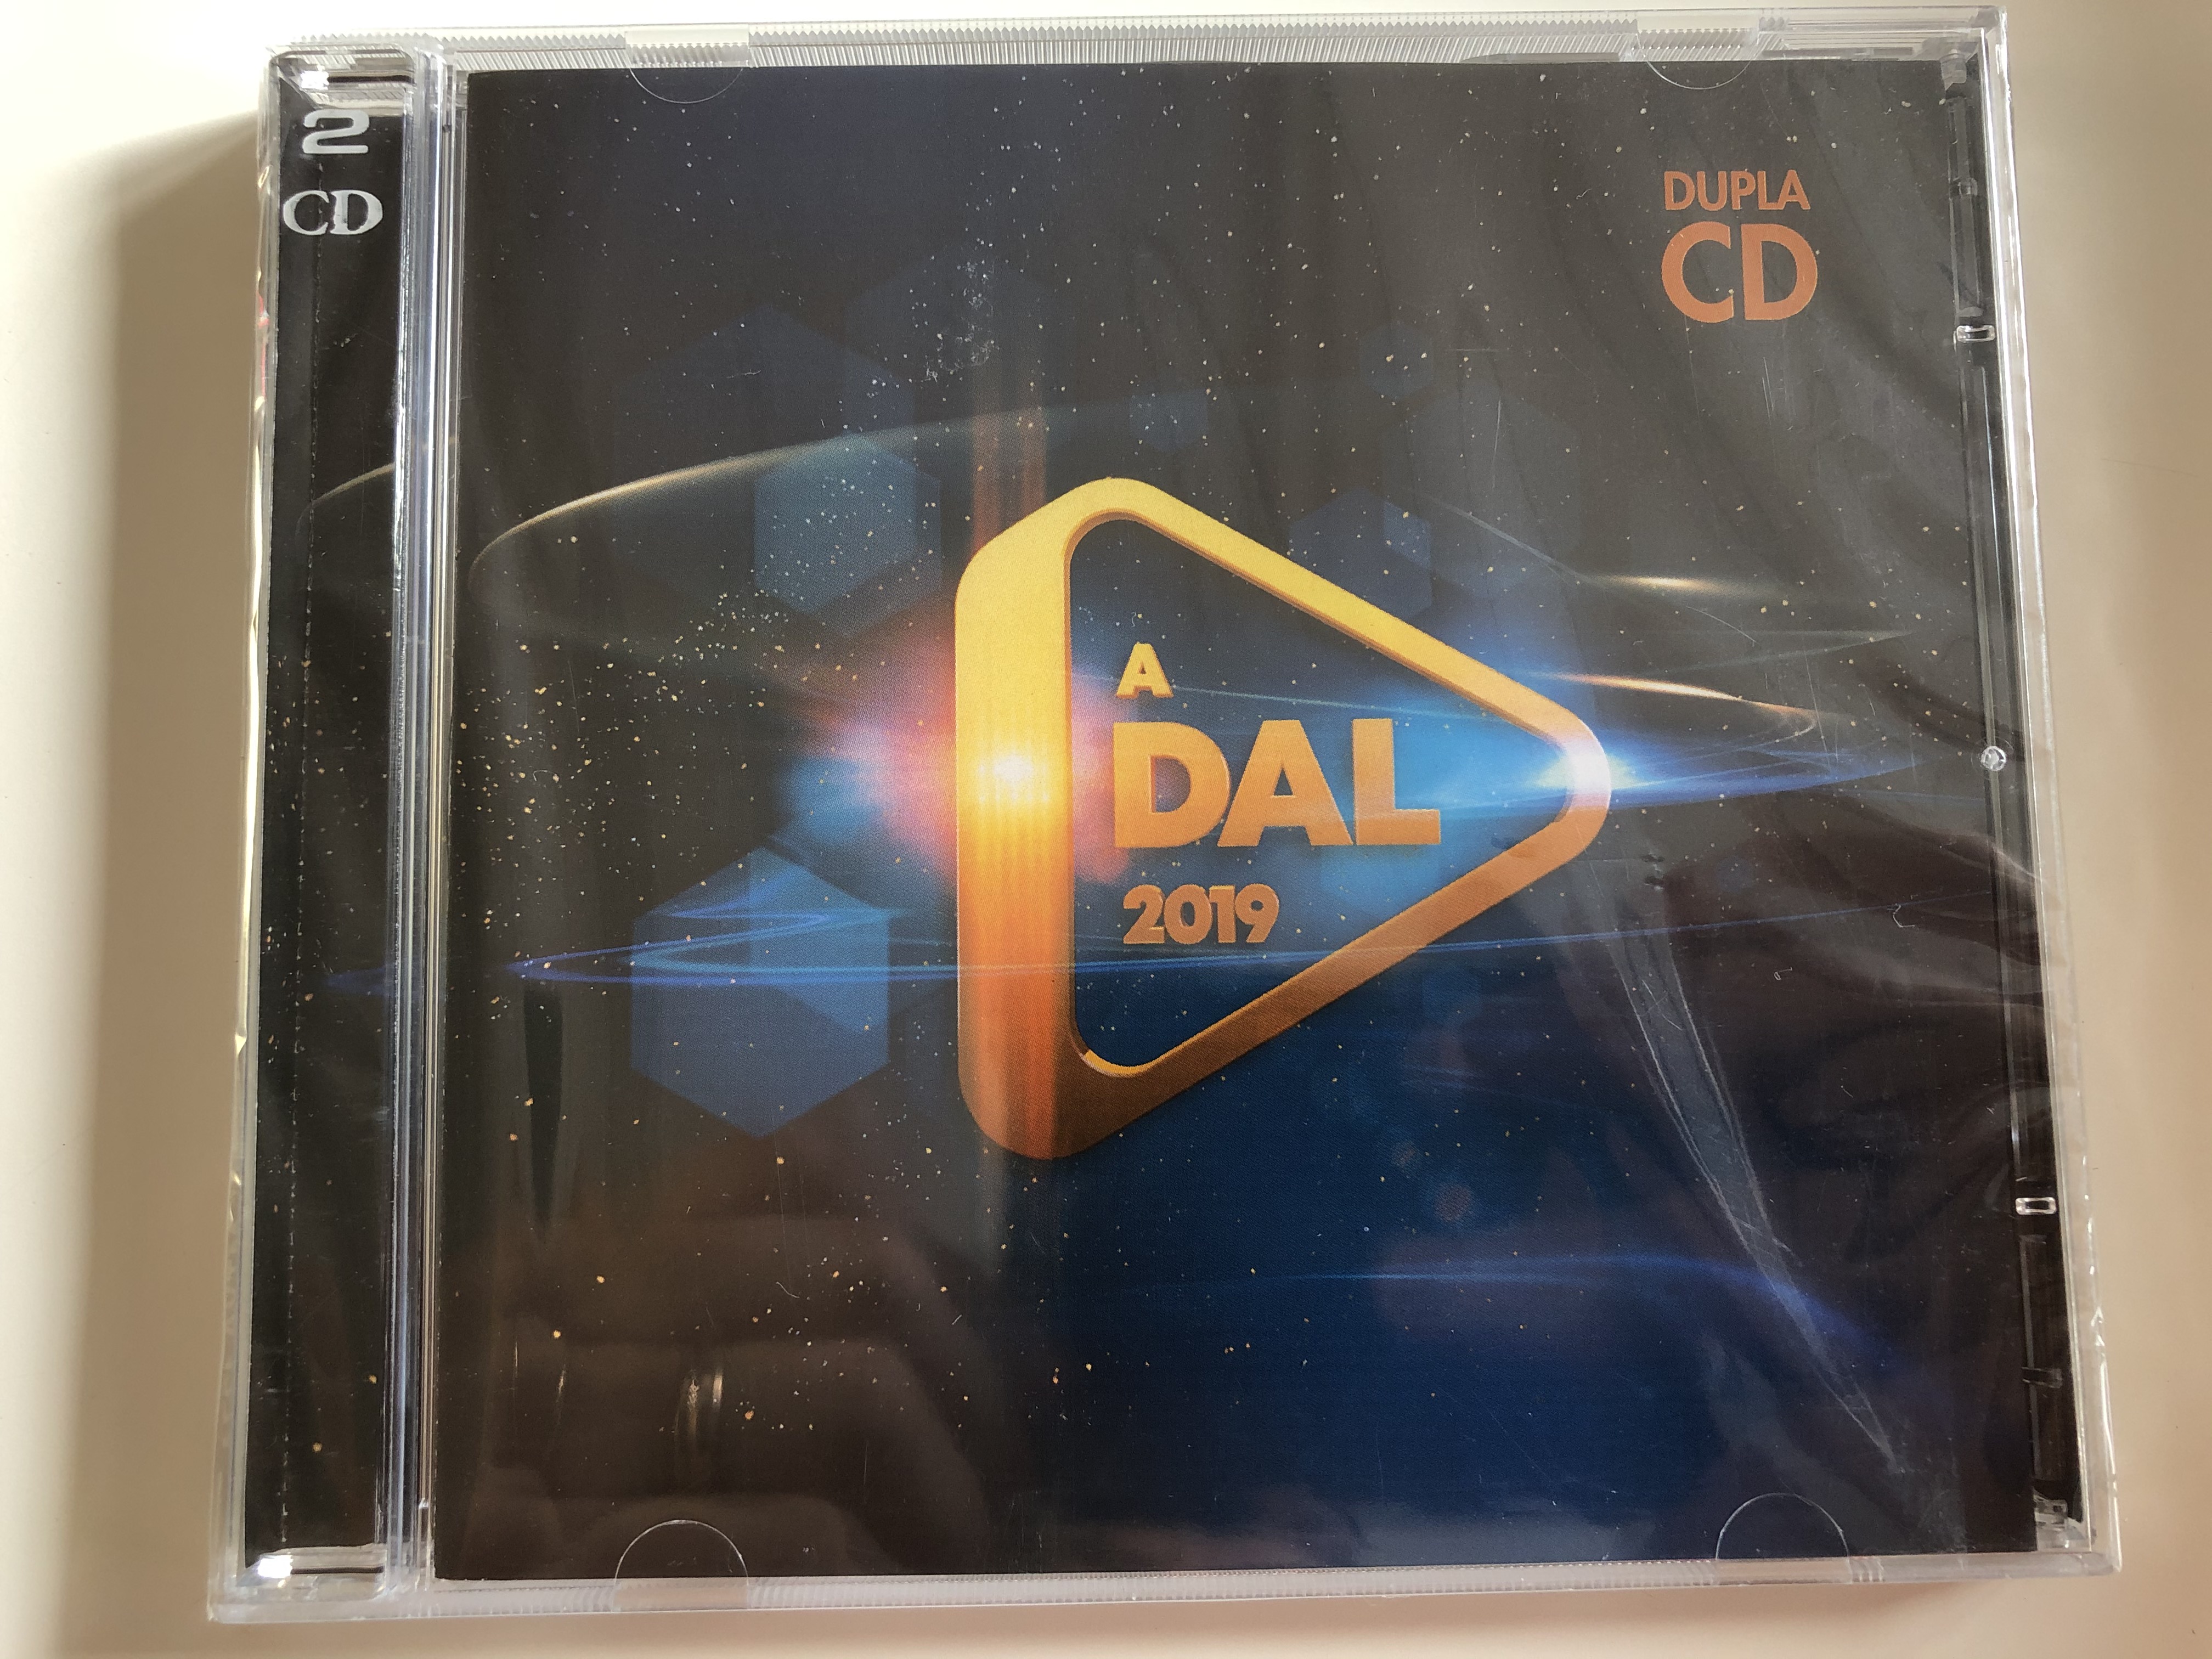 a-dal-2019-dupla-cd-mtva-2x-audio-cd-2019-5999542818301-1-.jpg